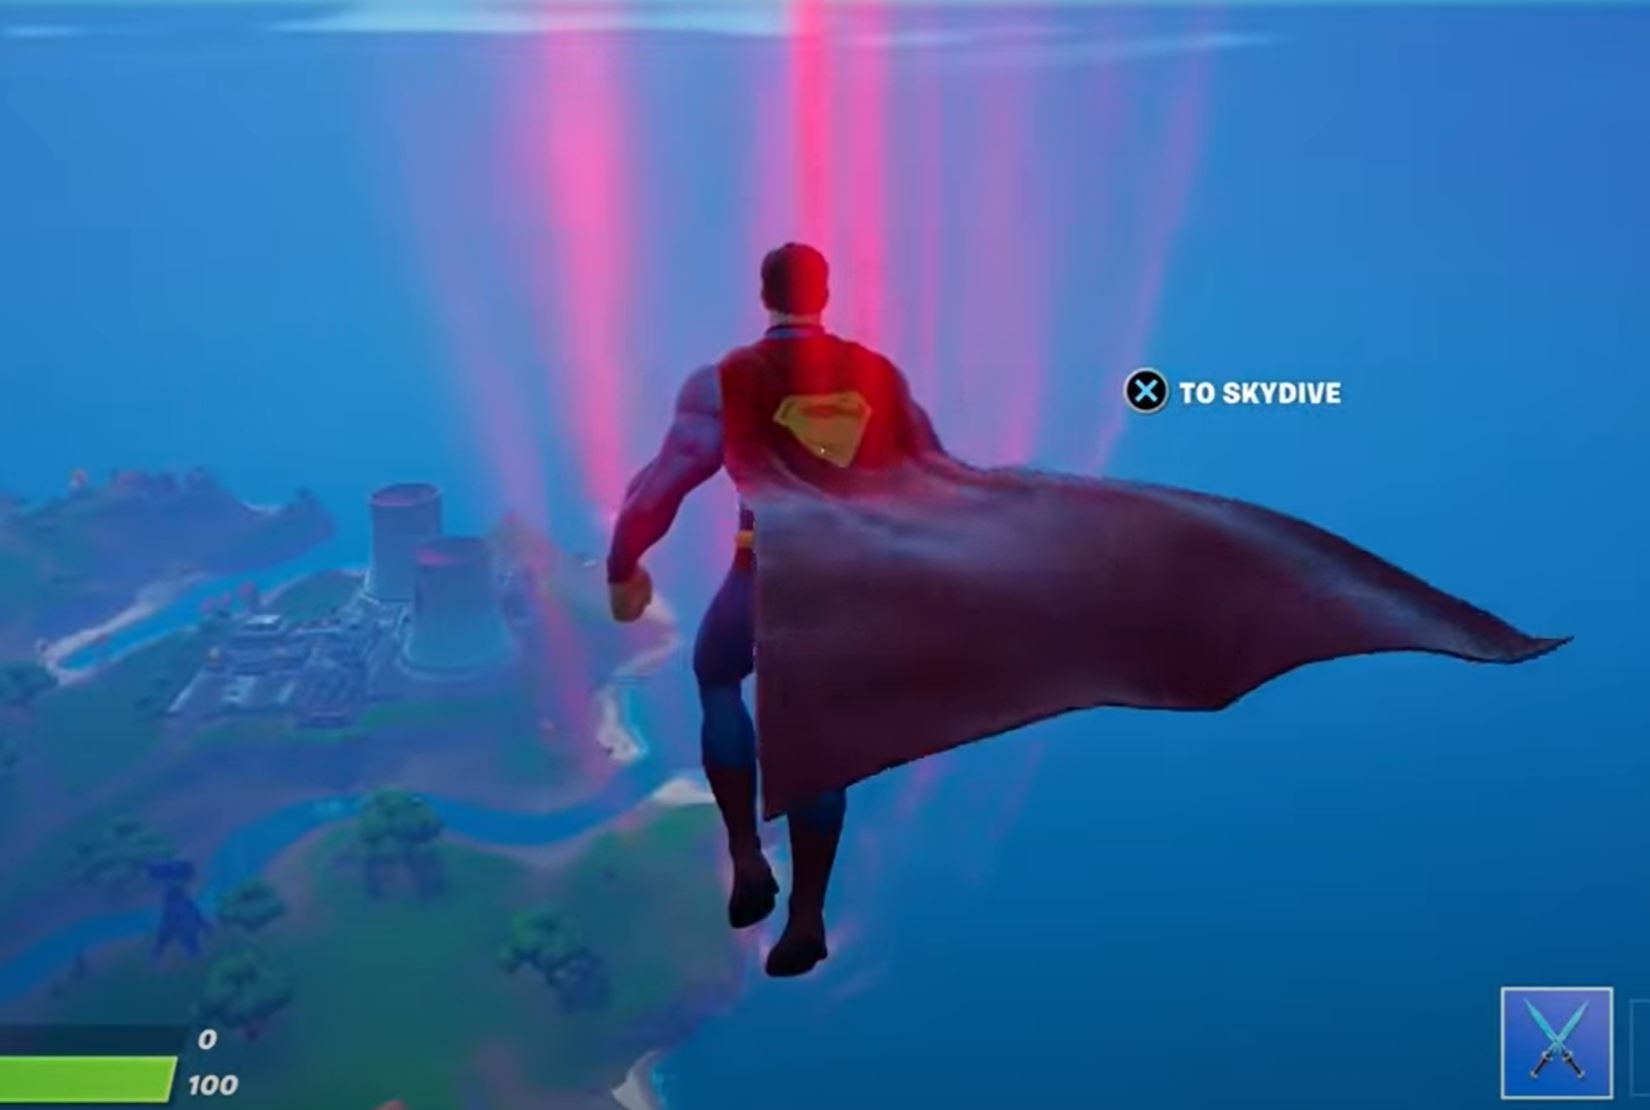 Superman skin's divedown animation